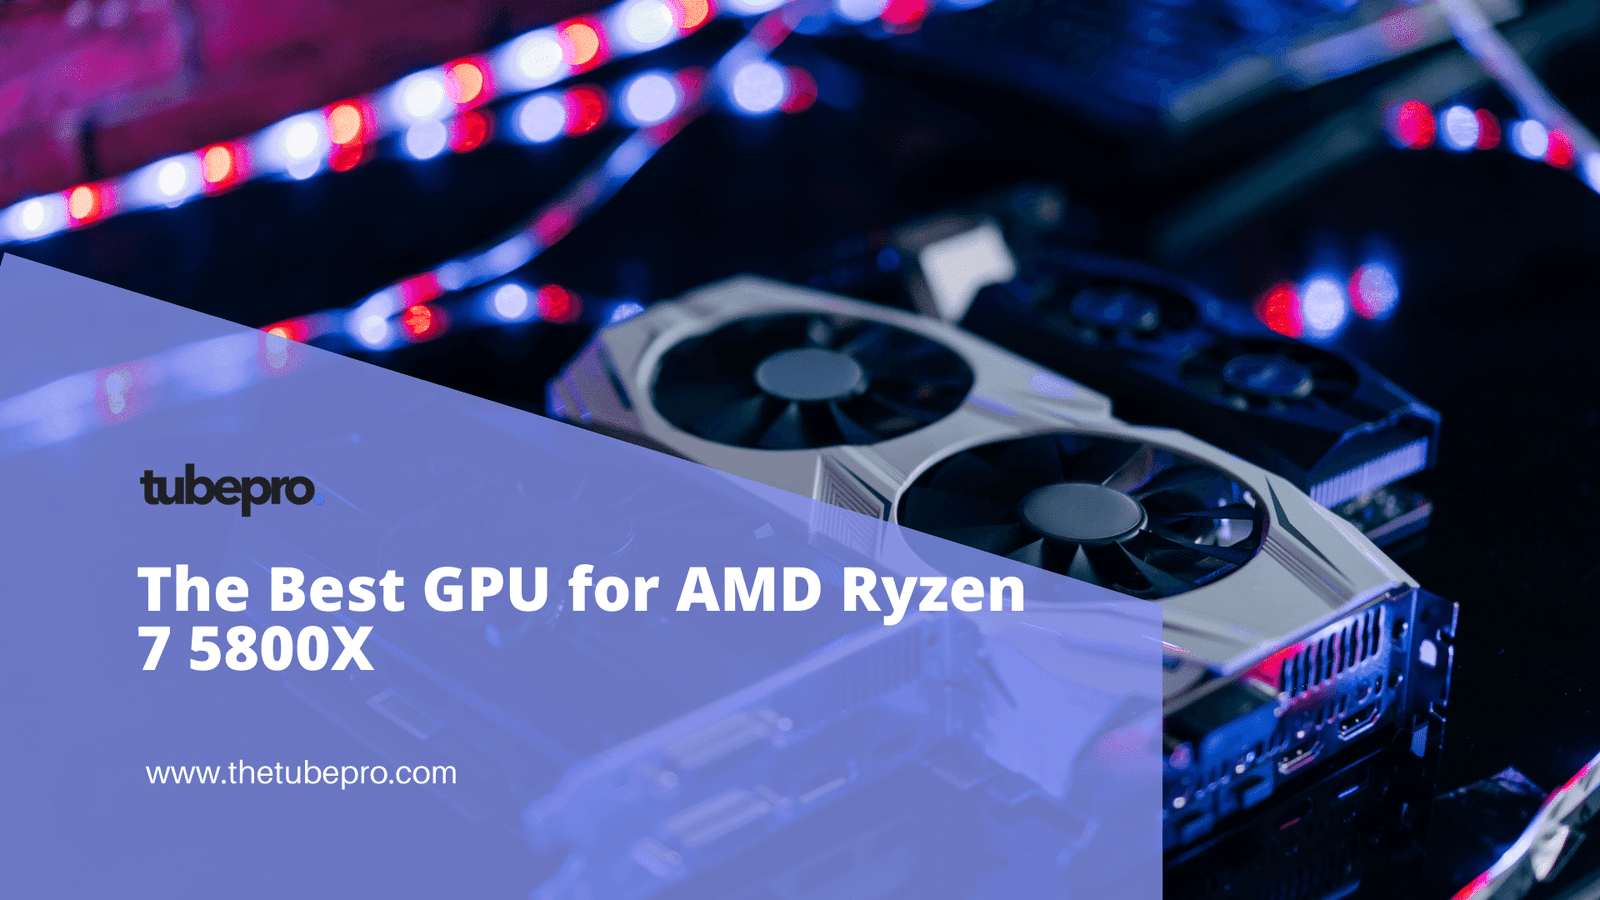 The Best GPU for AMD Ryzen 7 5800X